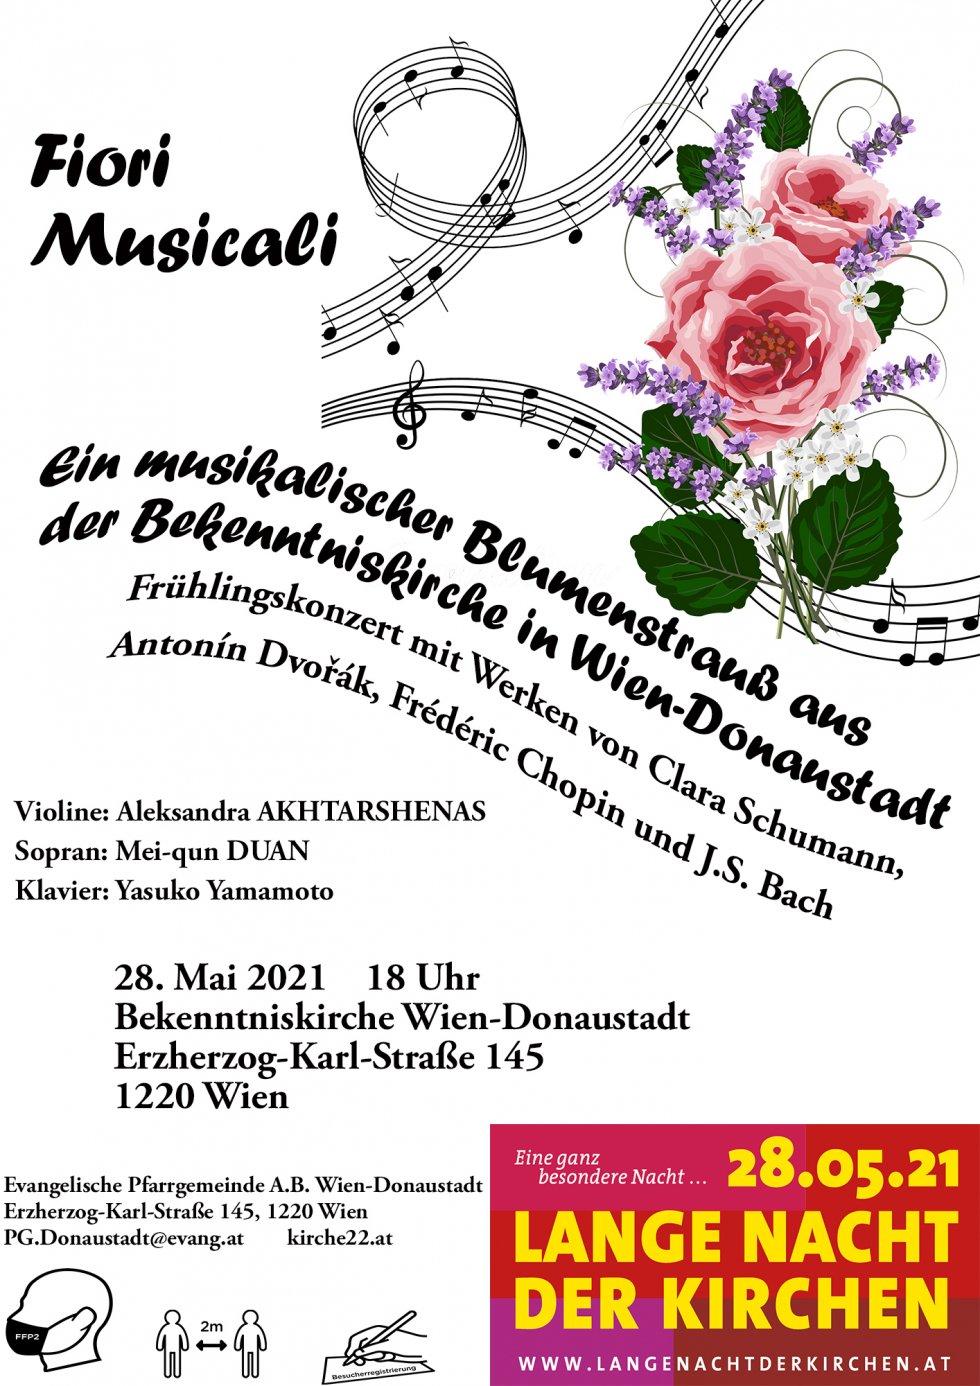 Fiori Musicali - Frühlingskonzert in der Bekenntniskirche in Wien-Donaustadt